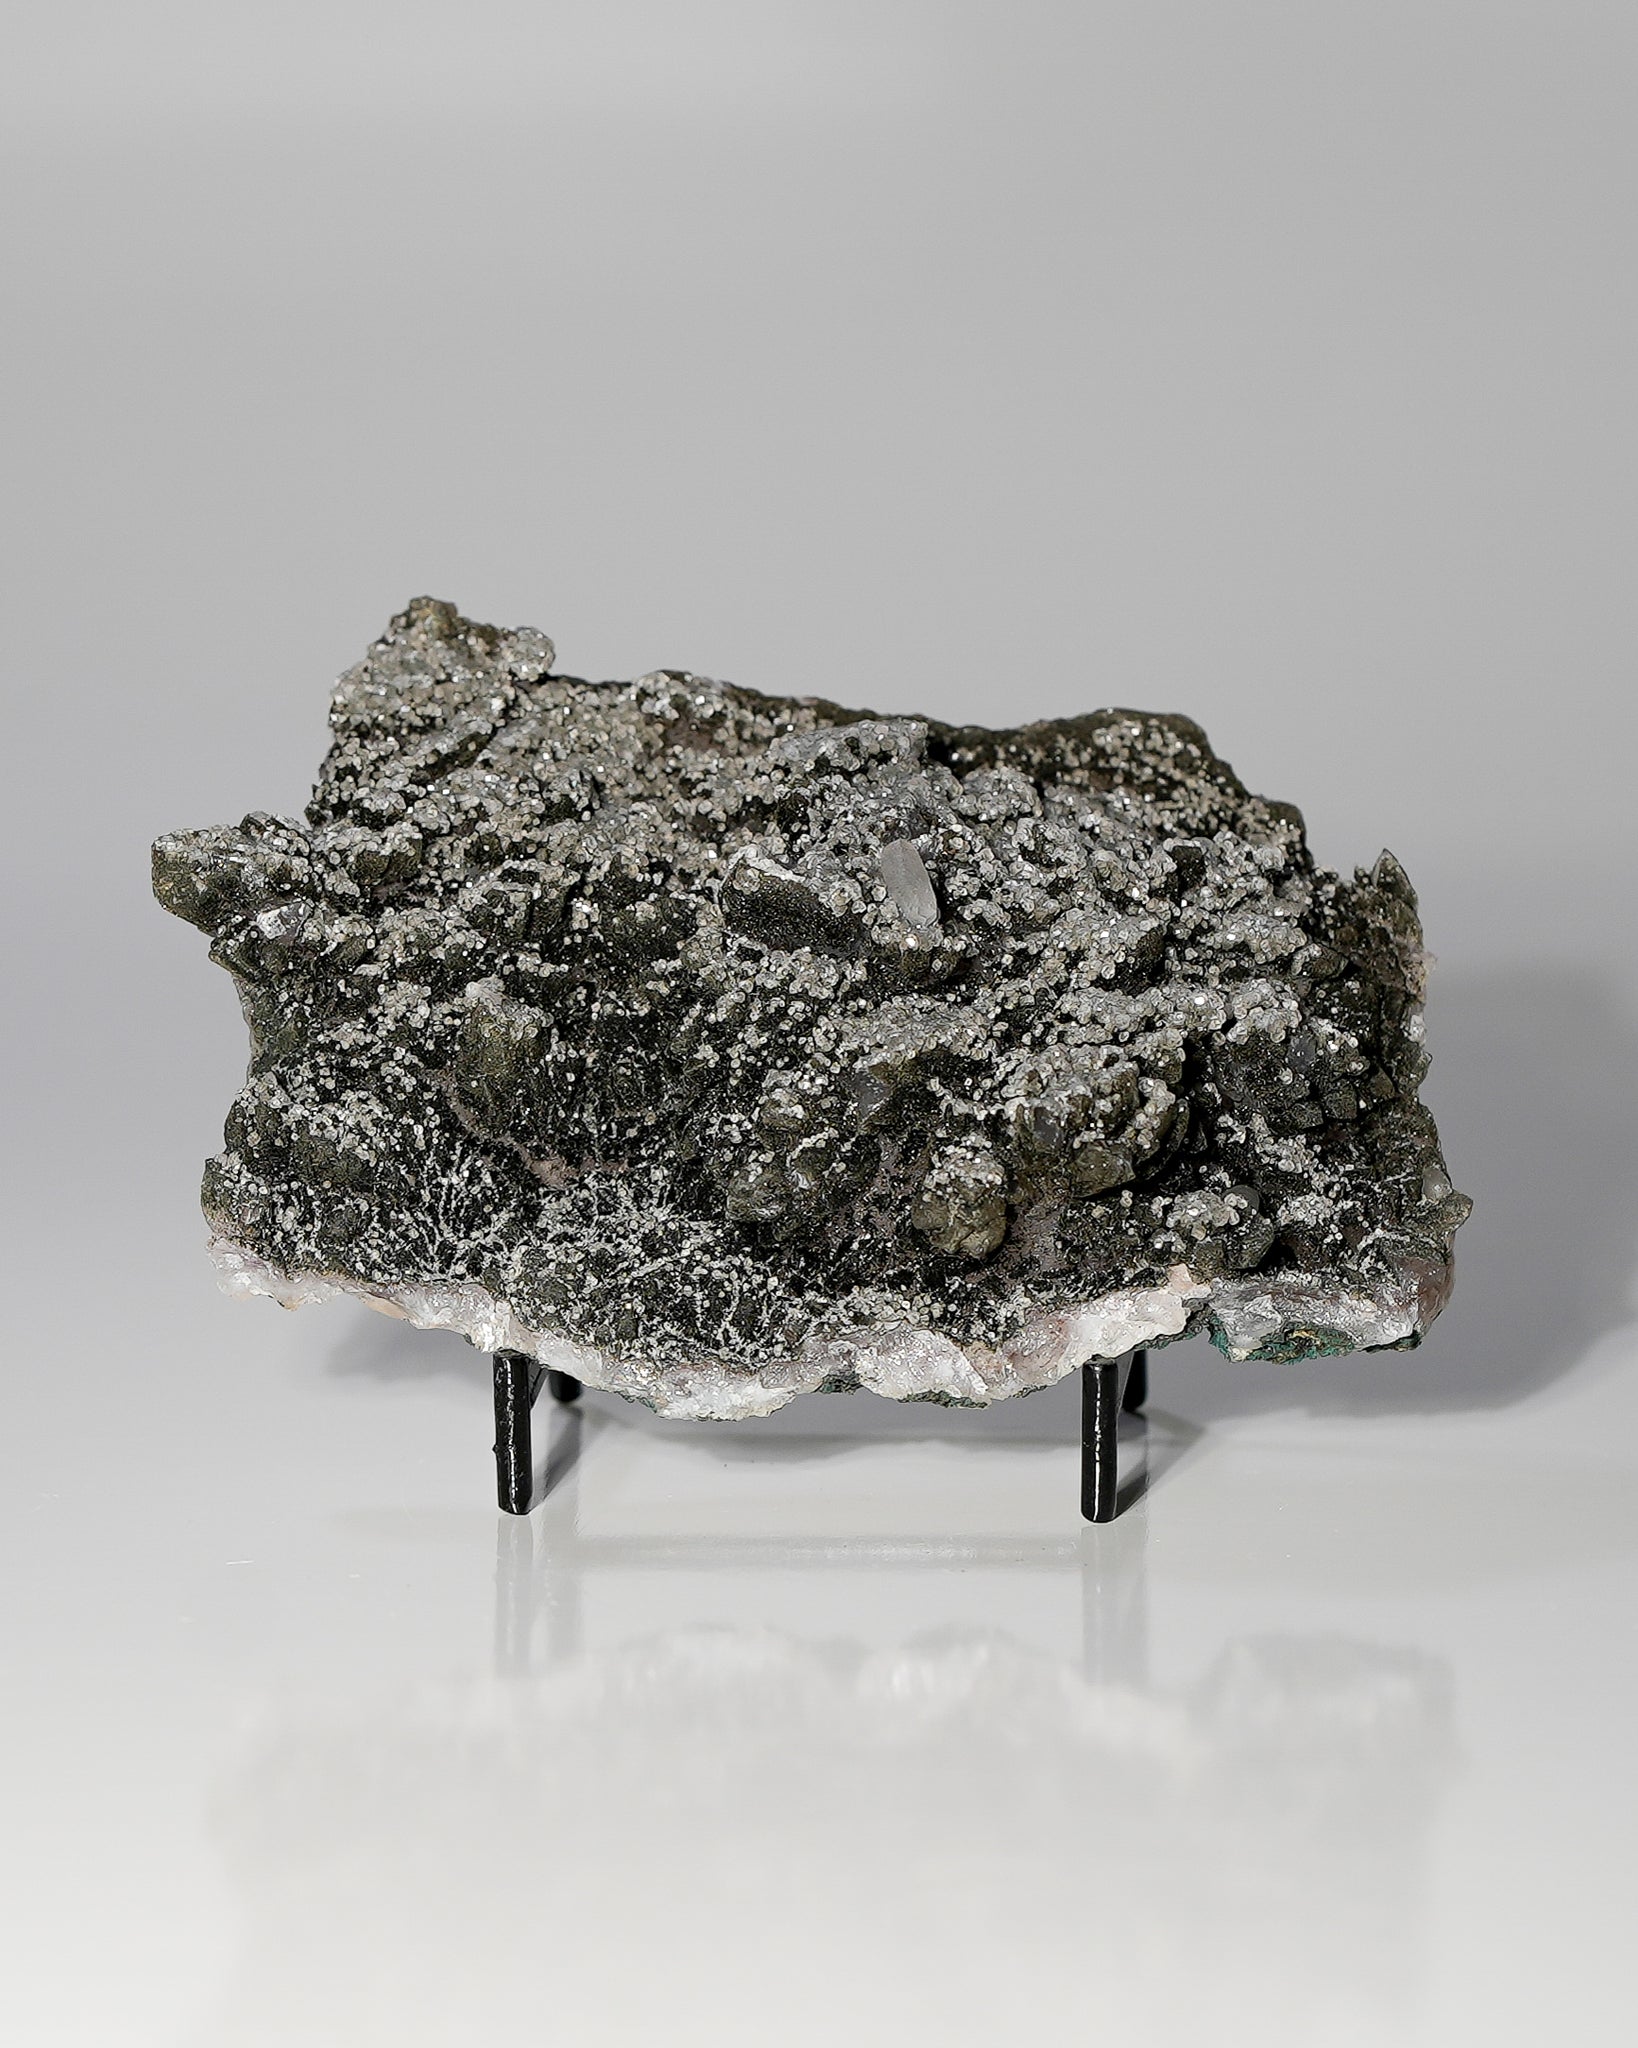 Manganoan Adamite and Calcite on Psilomelane